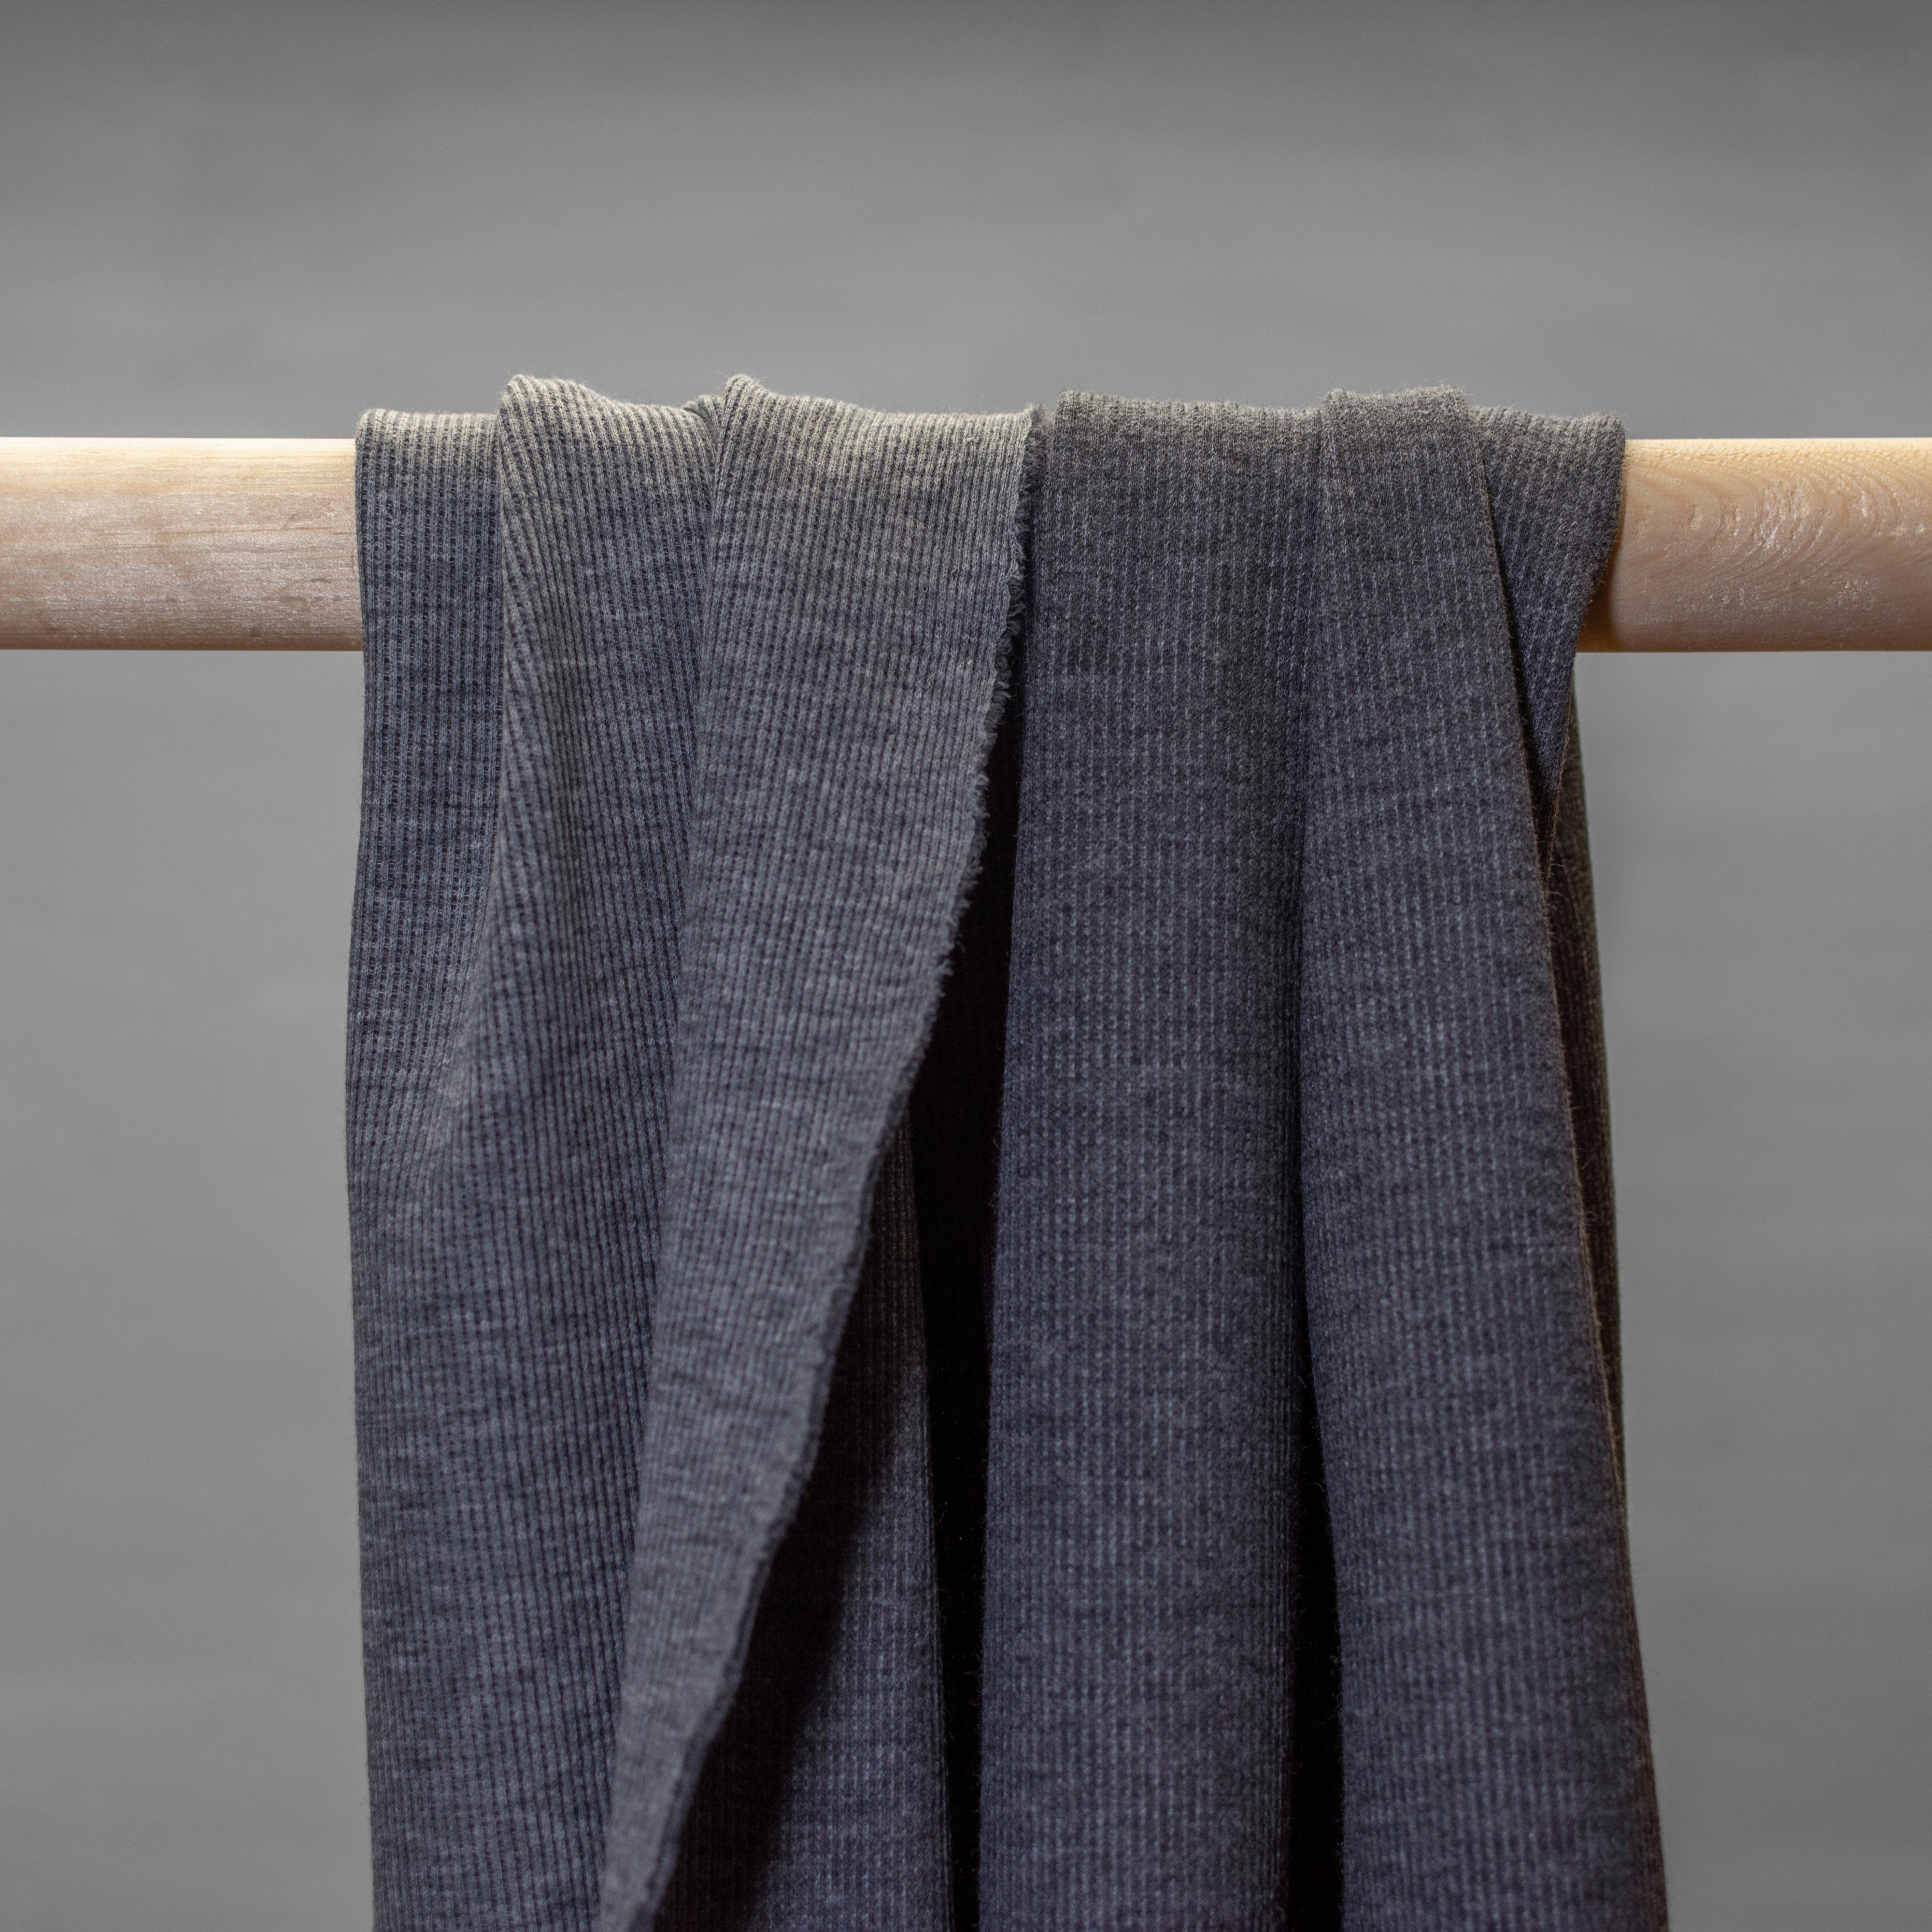  Grey rib knit jersey hanging in folds.